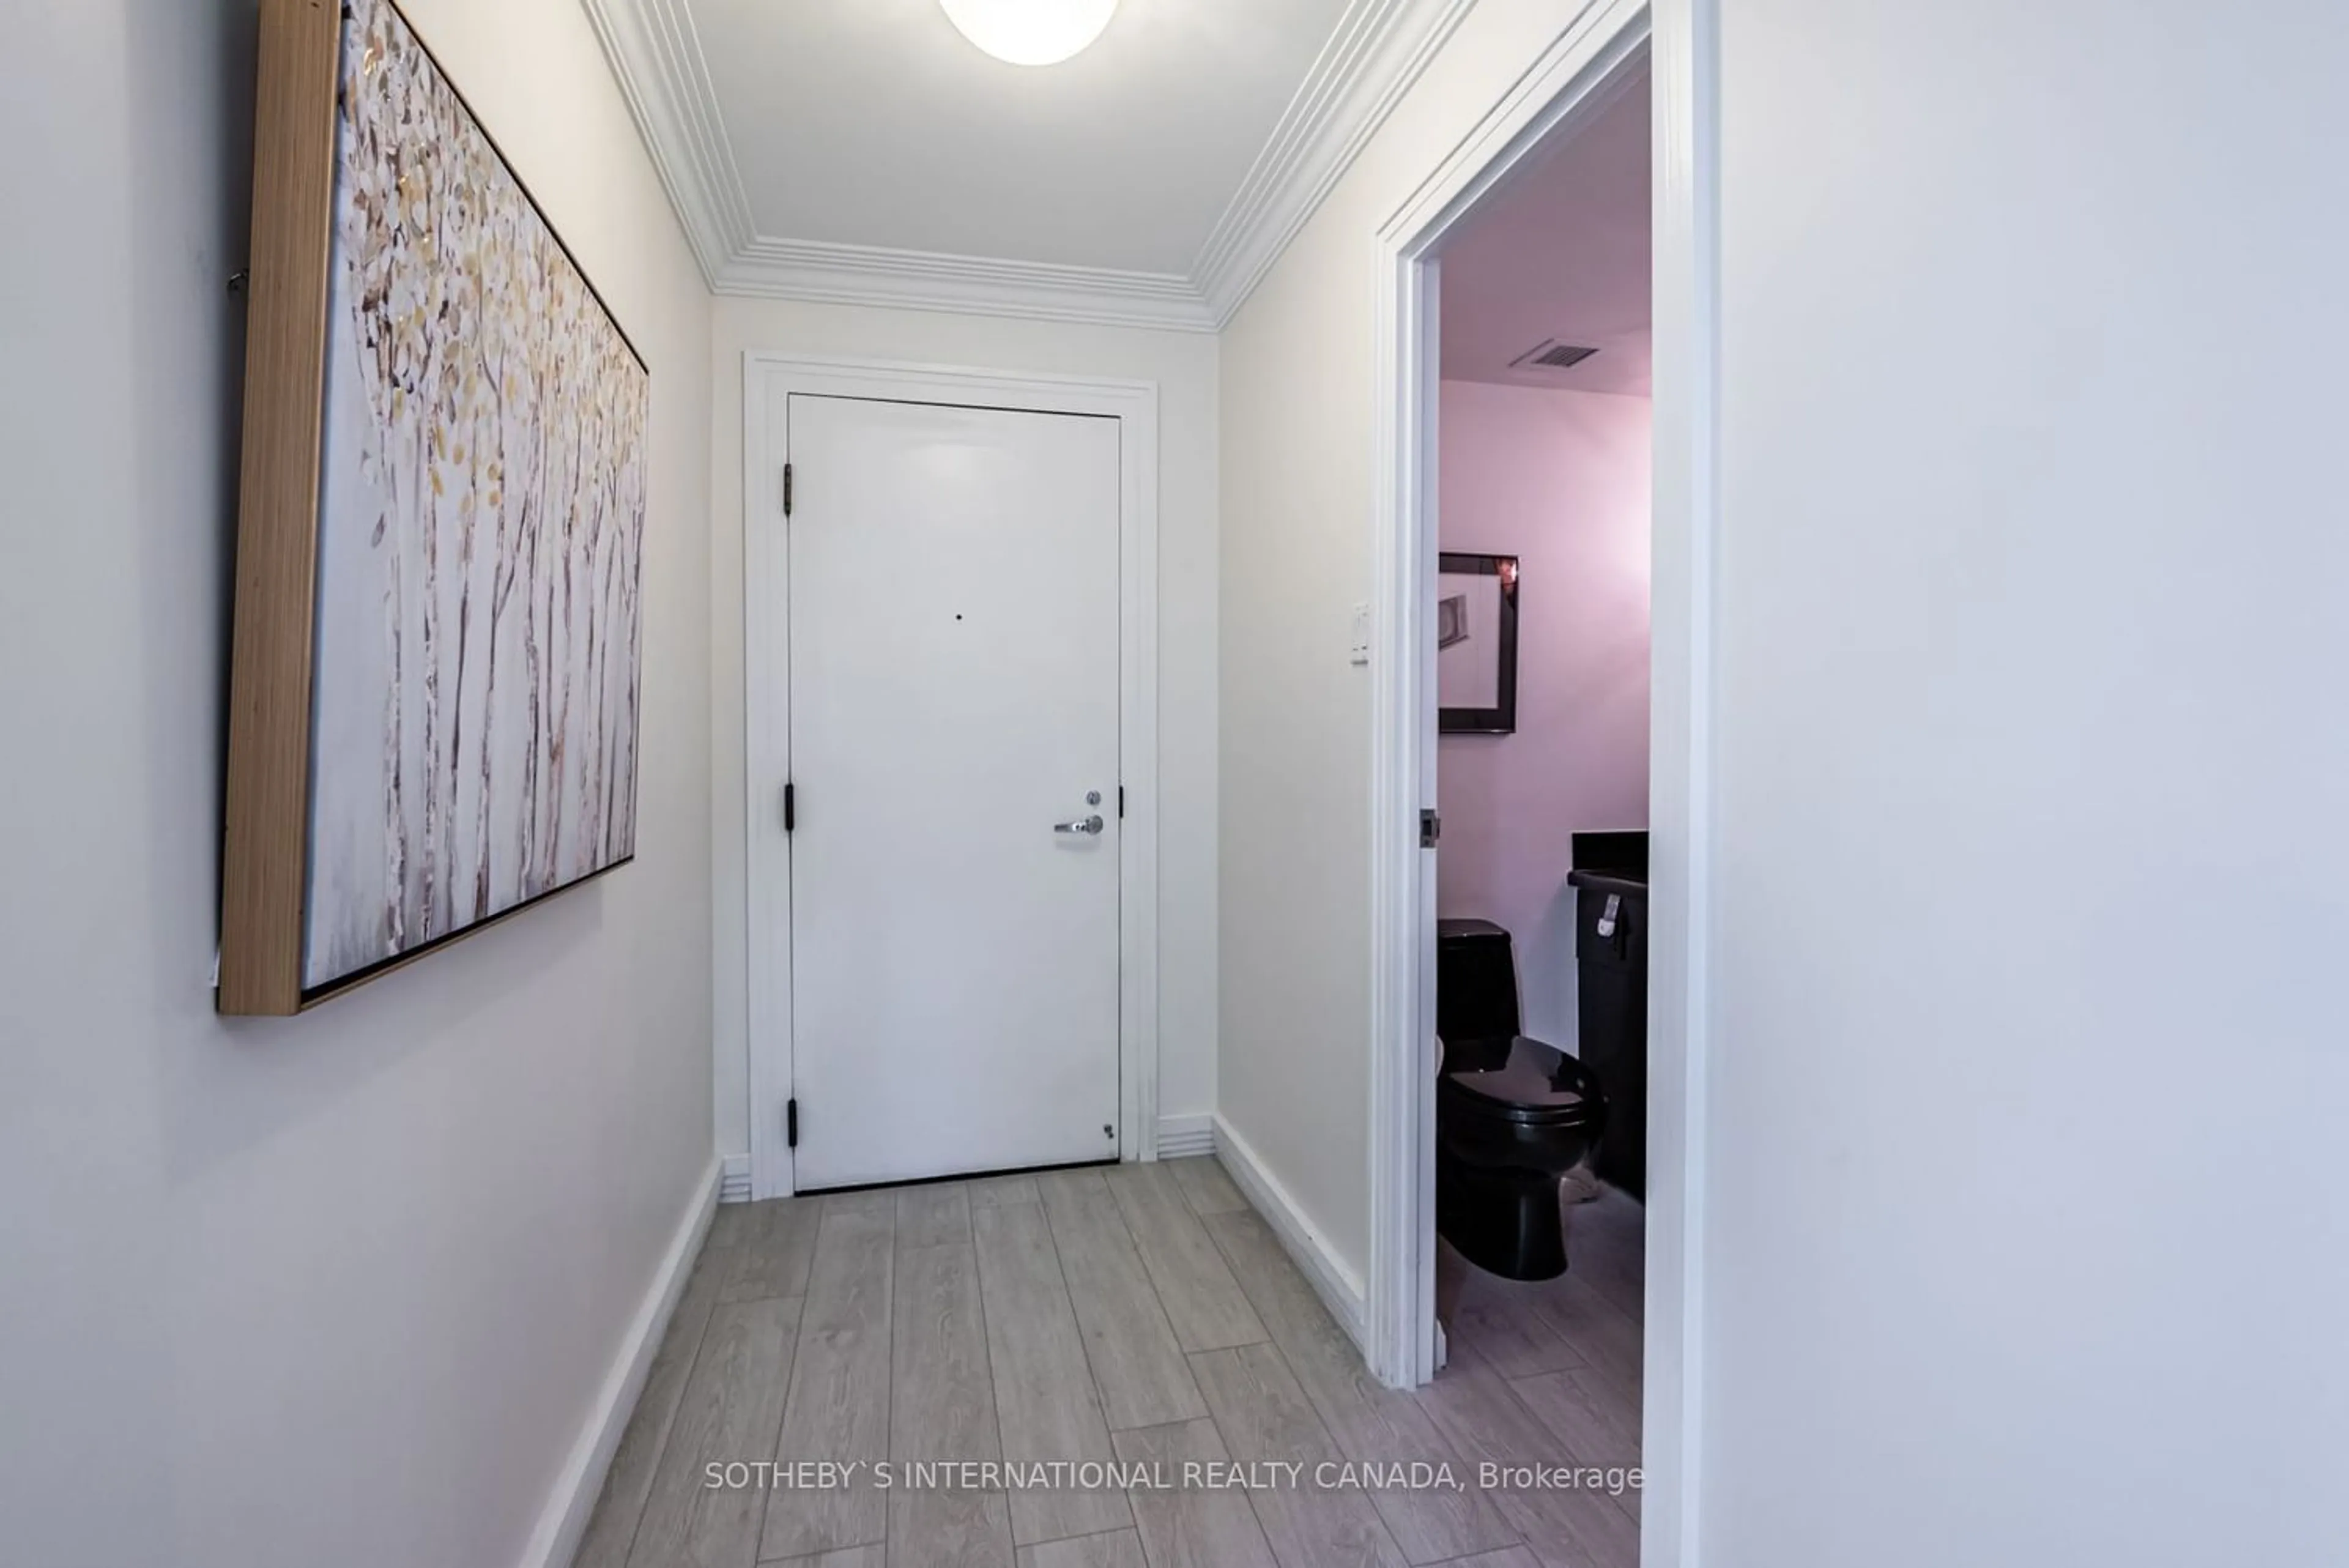 Indoor entryway for 61 St Clair Ave #1504, Toronto Ontario M4V 2Y8